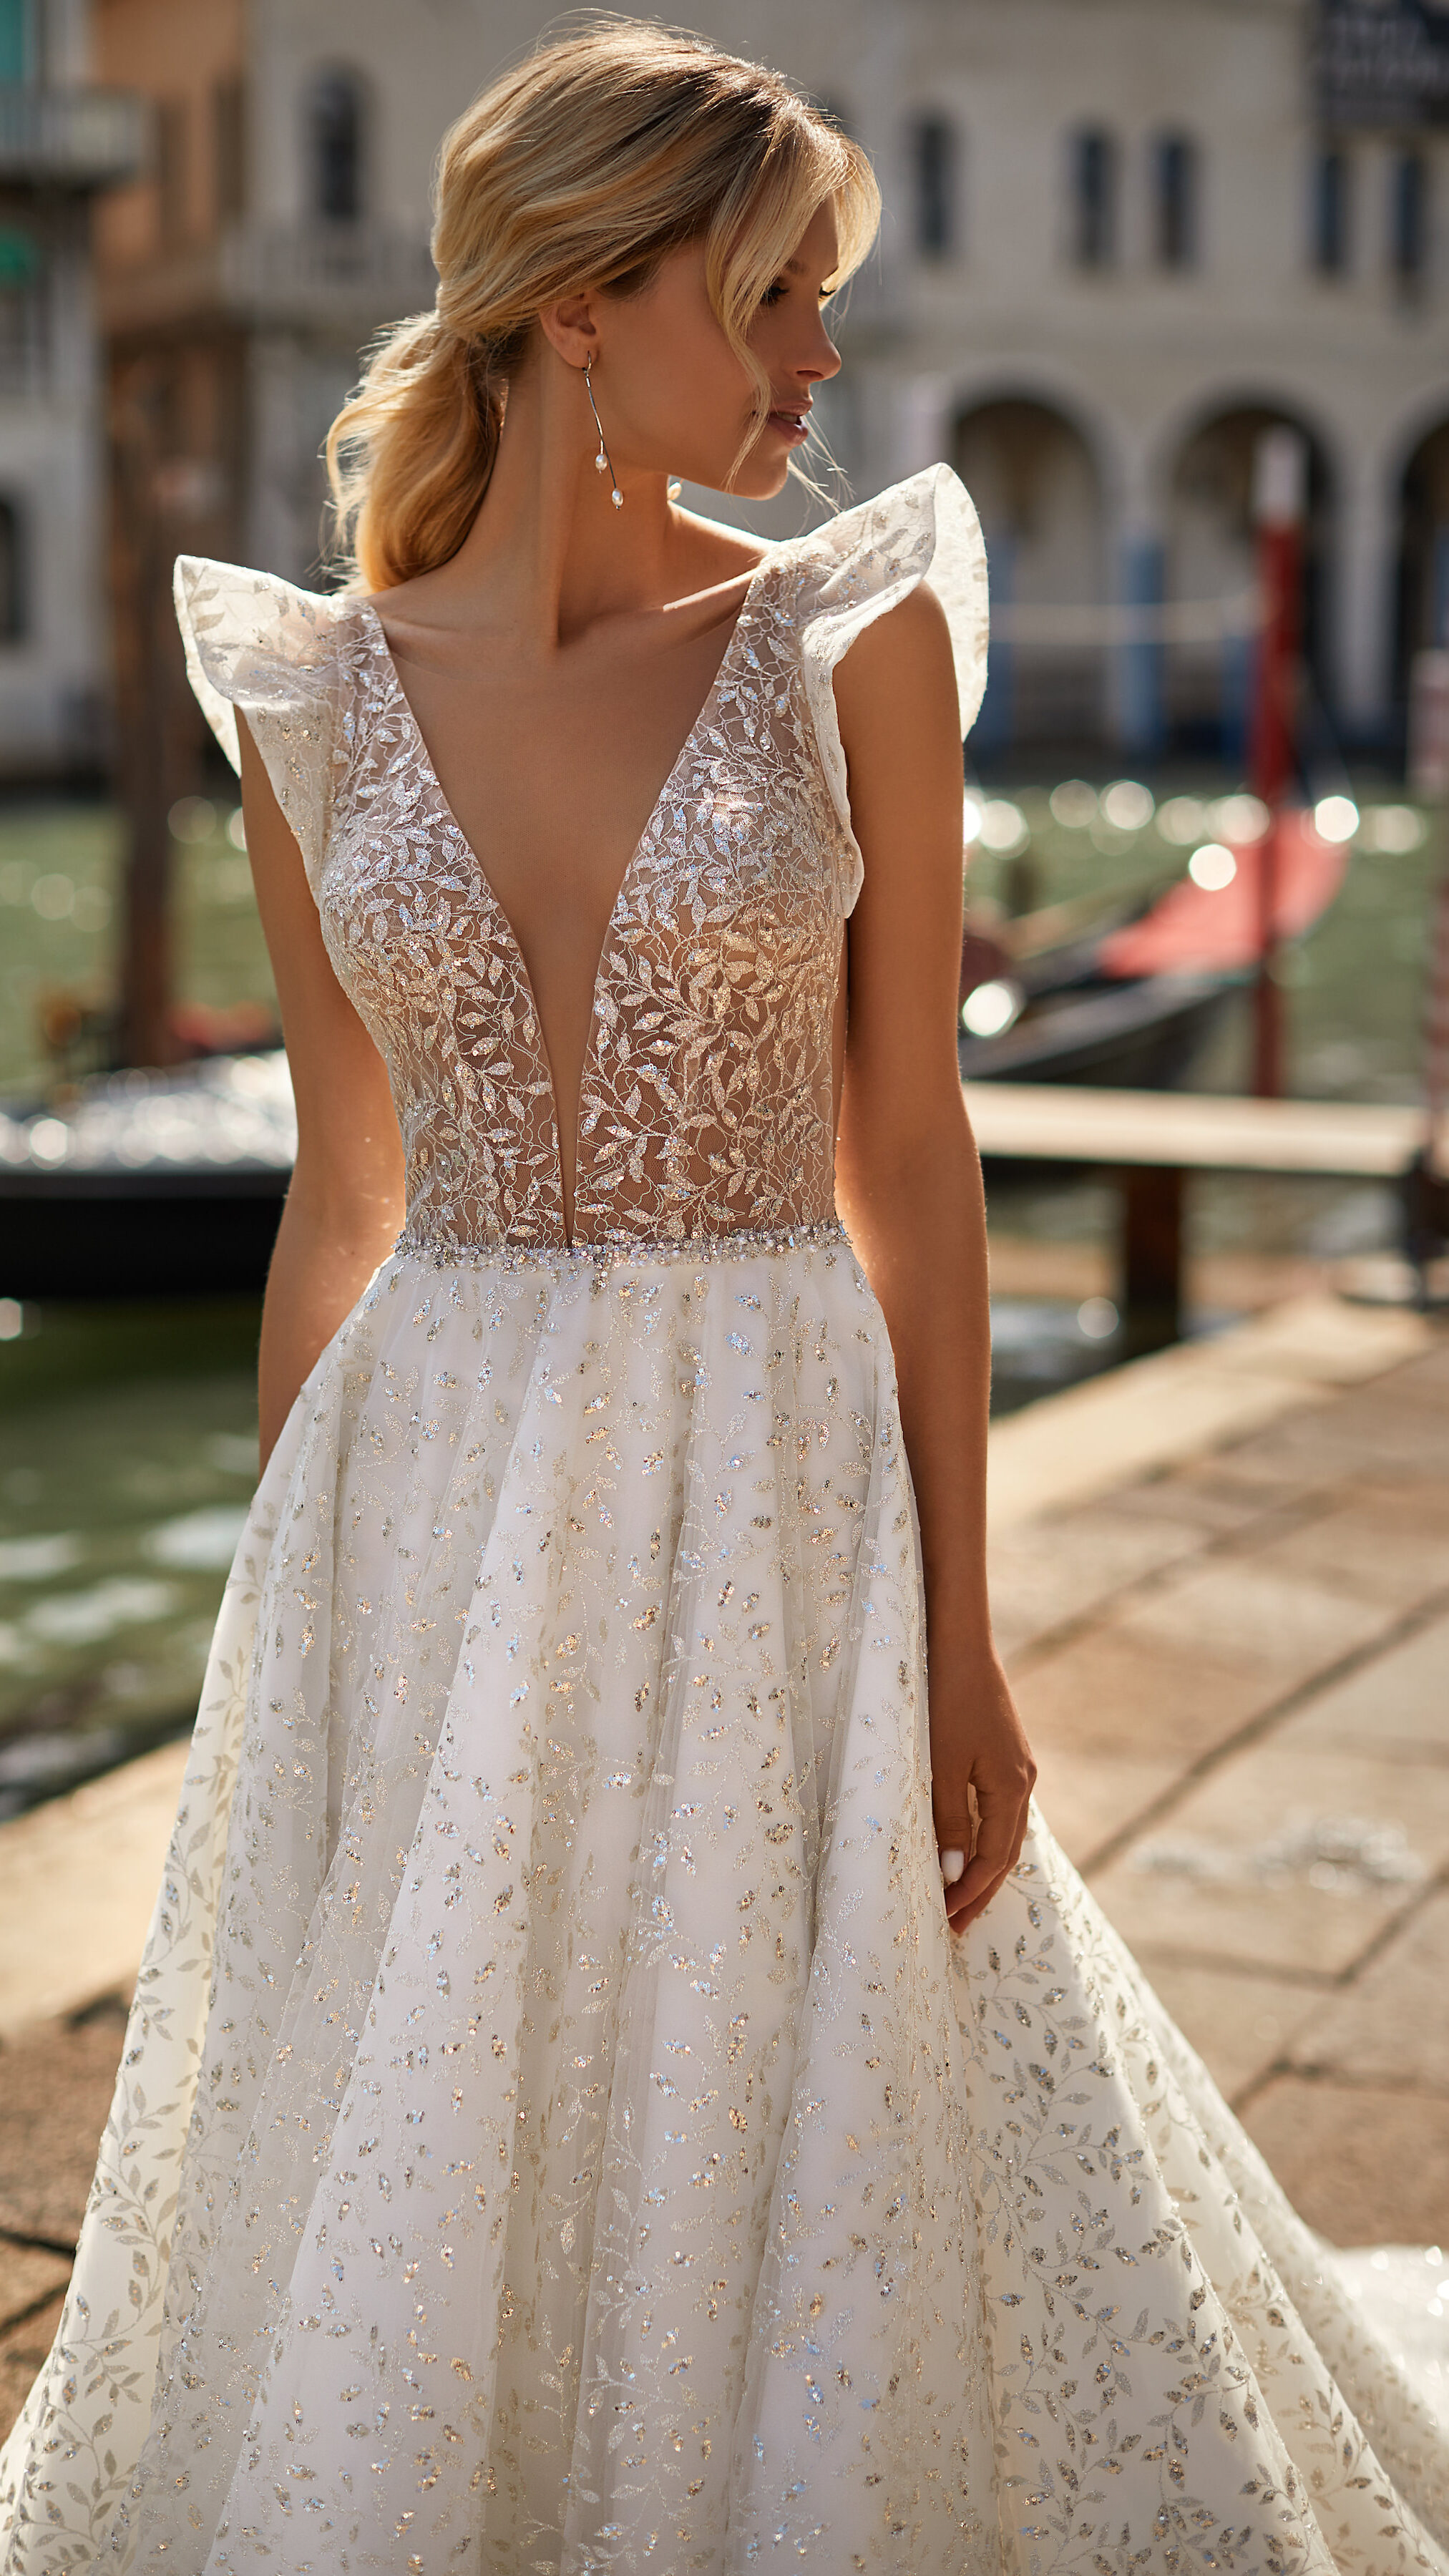 Helen by Katy Corso wedding dress